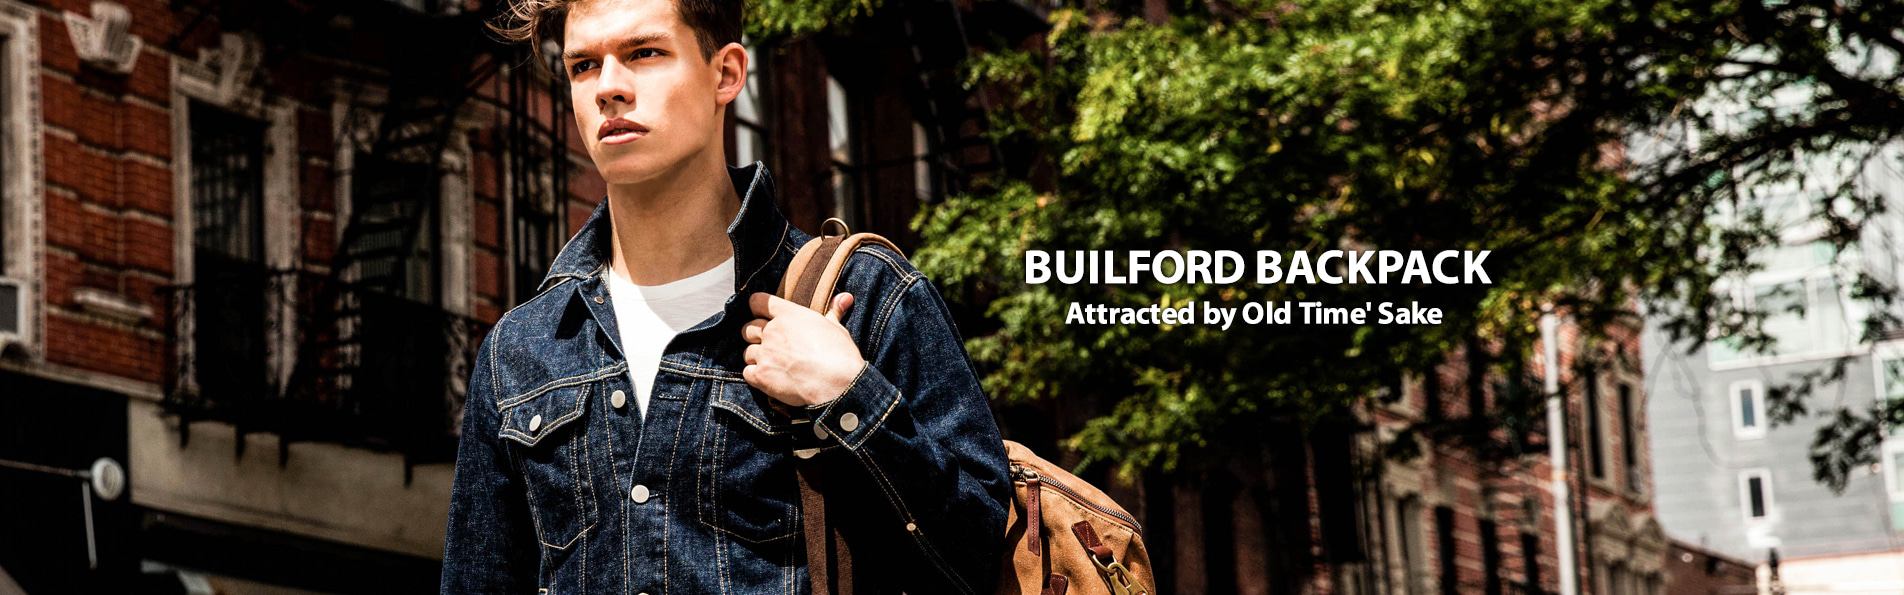 builford backpack